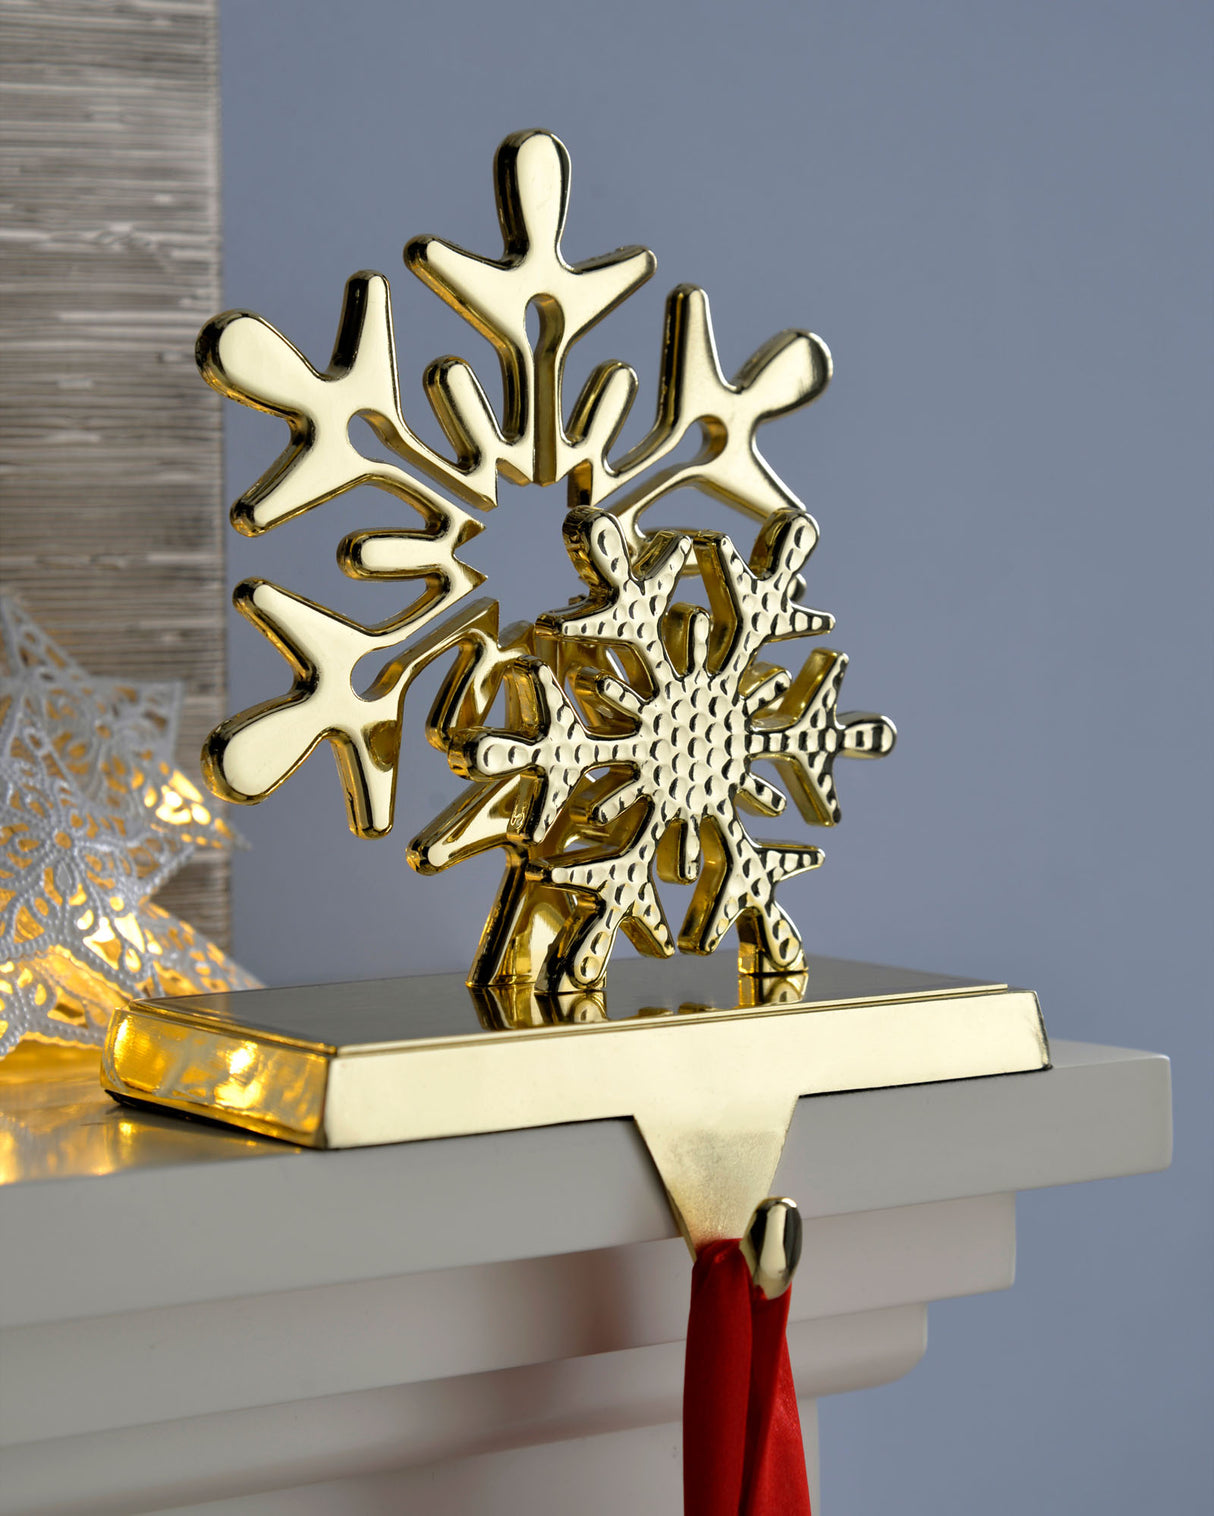 Snowflake Stocking Holder, Gold, 17 cm